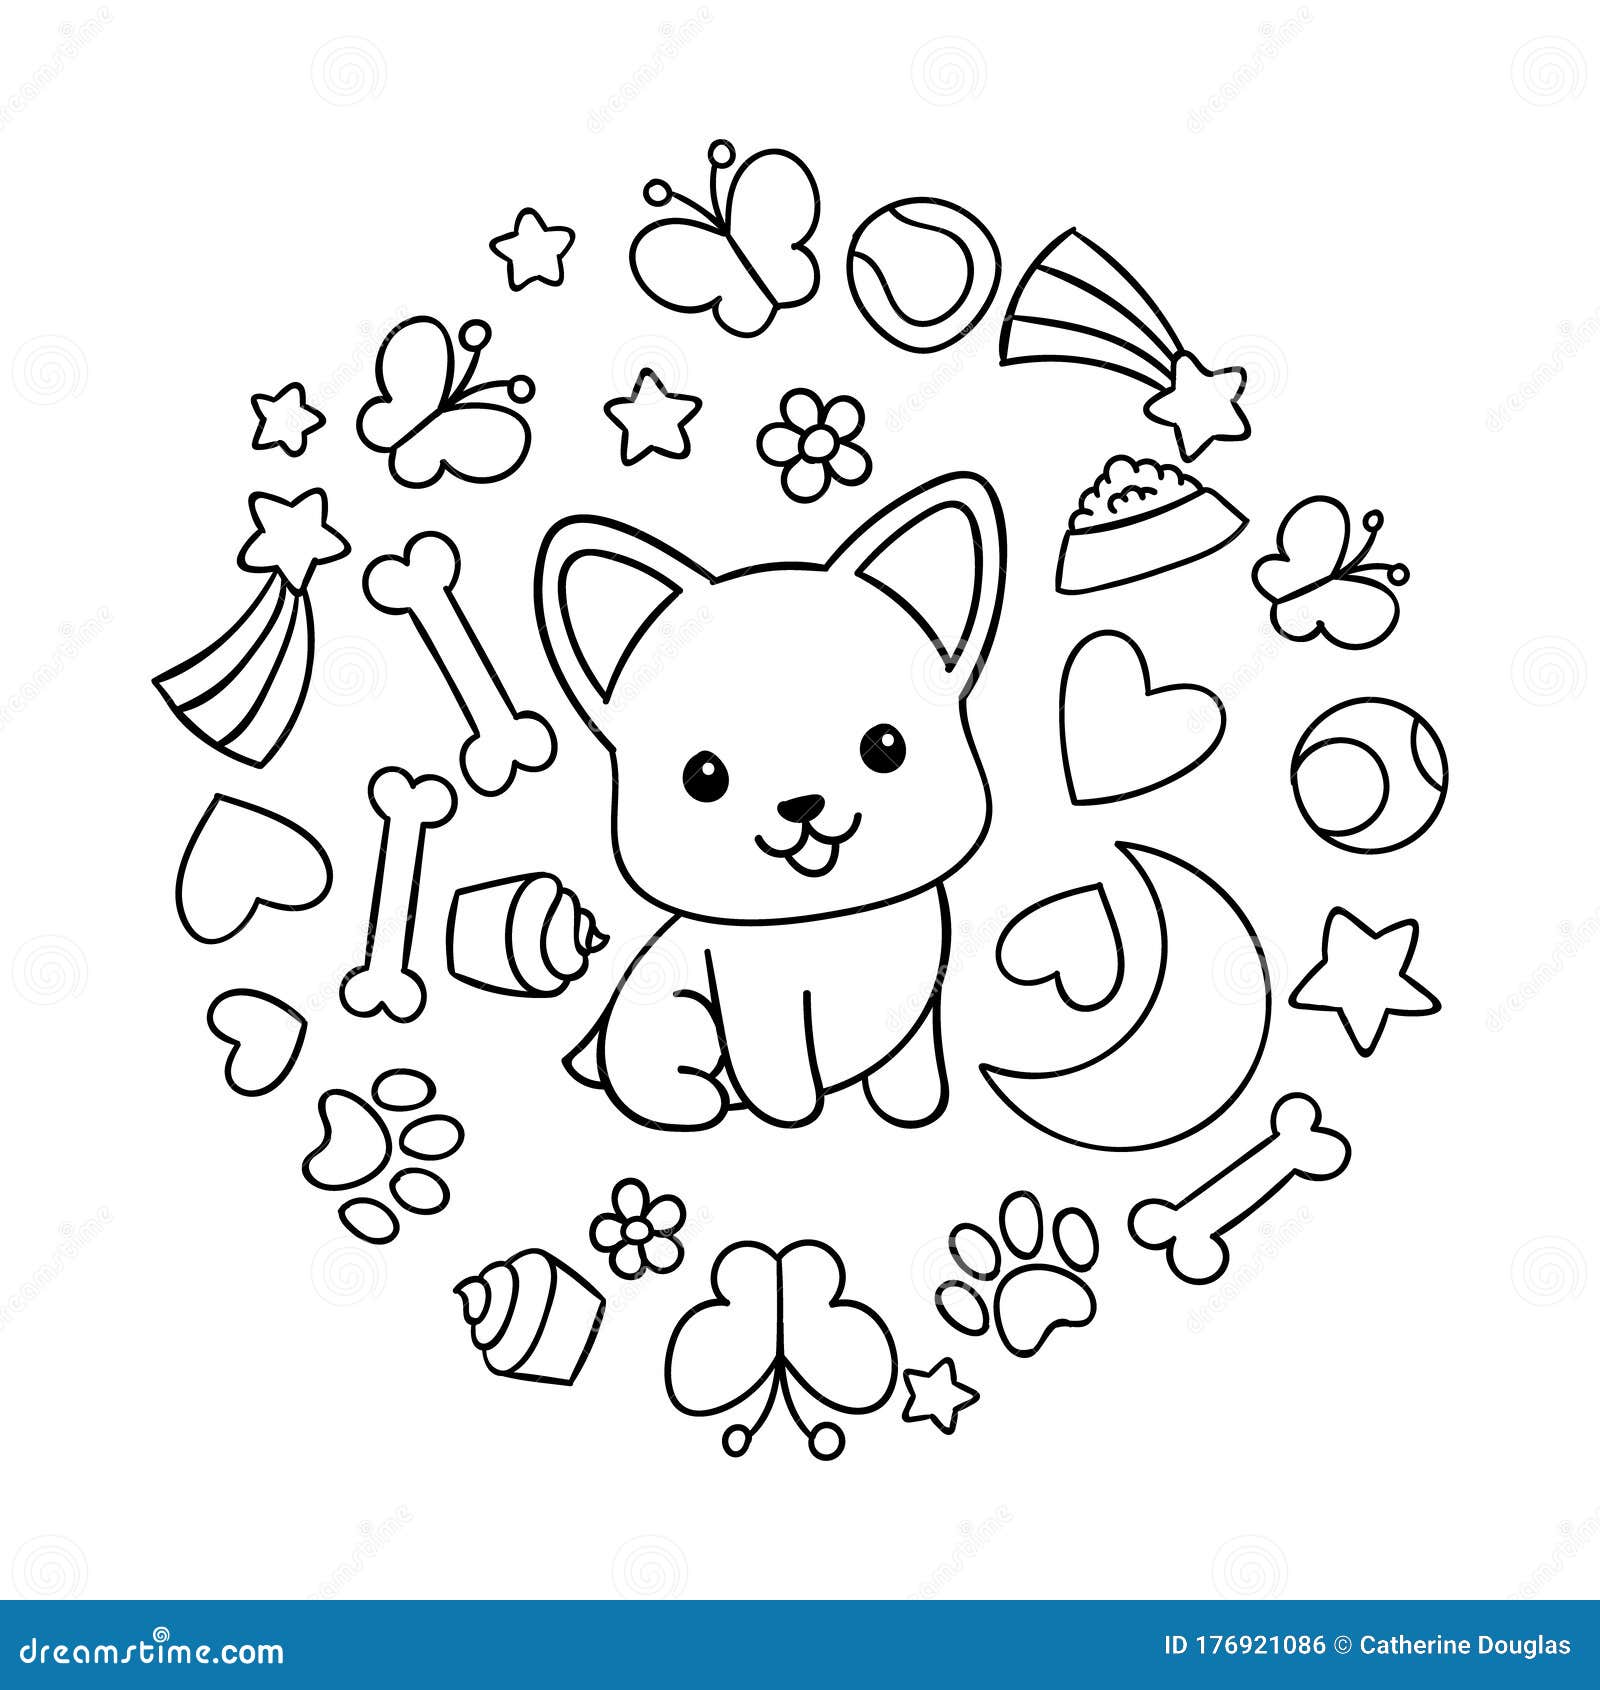 coloring pages black and white cute kawaii hand drawn corgi dog doodles circle print stock vector illustration of isolated hand 176921086